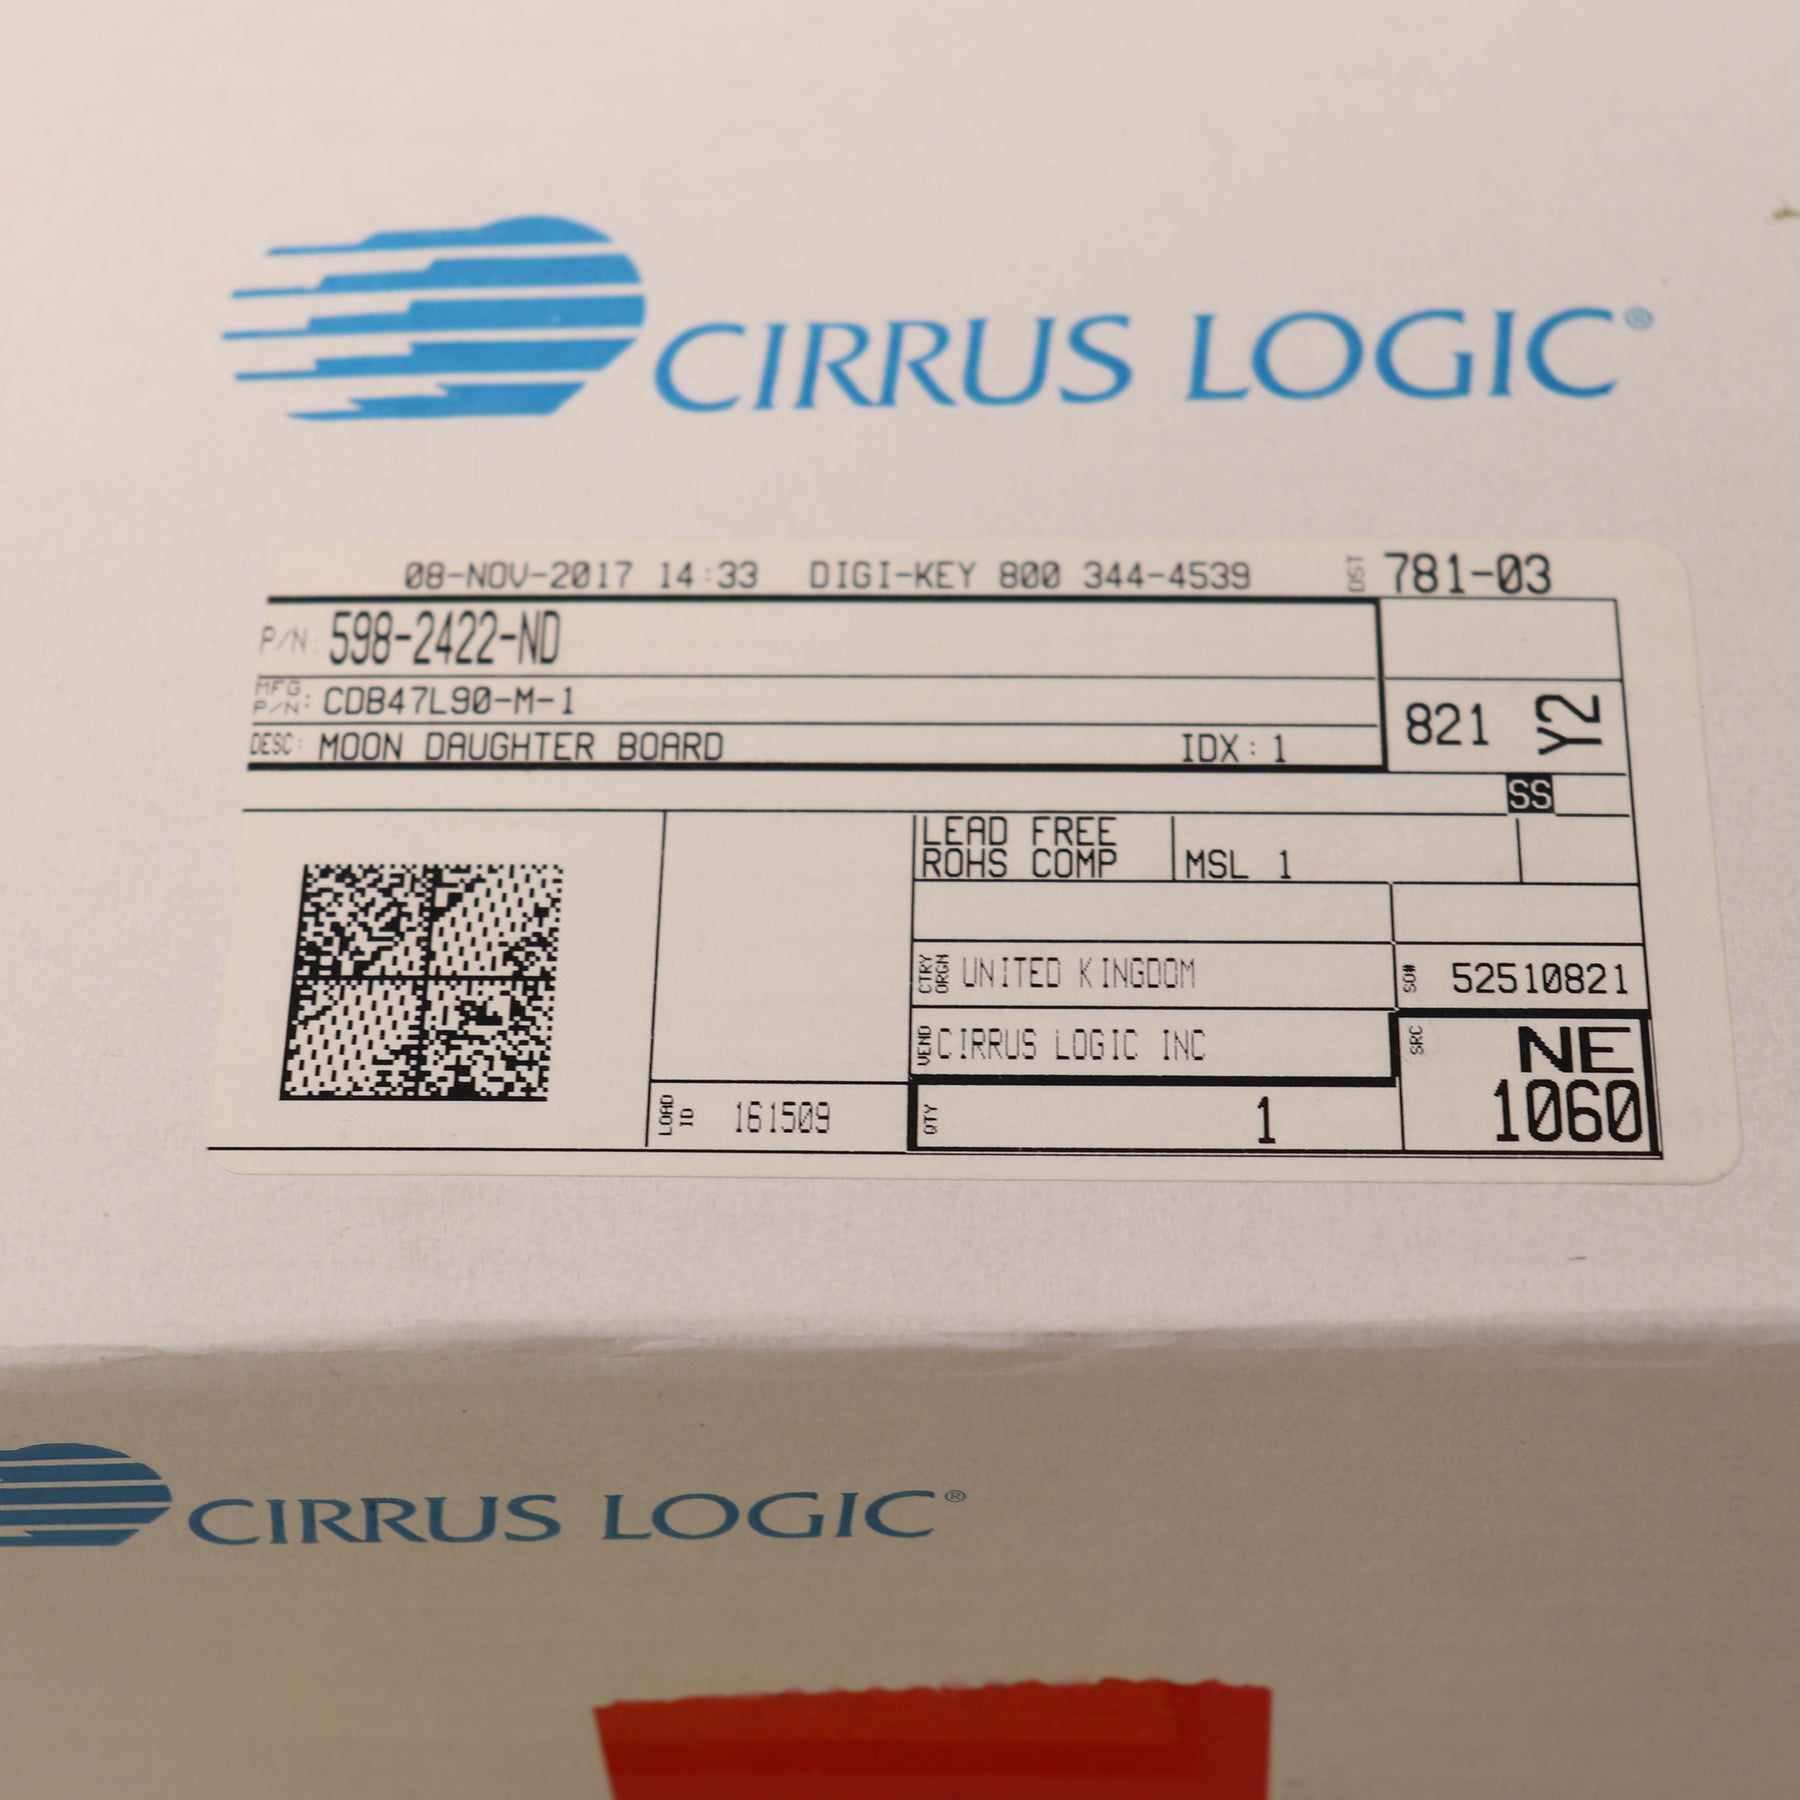 Cirrus Logic "ABERLOUR" CDB47L90-M-1-REV2 Moon Daughter Board